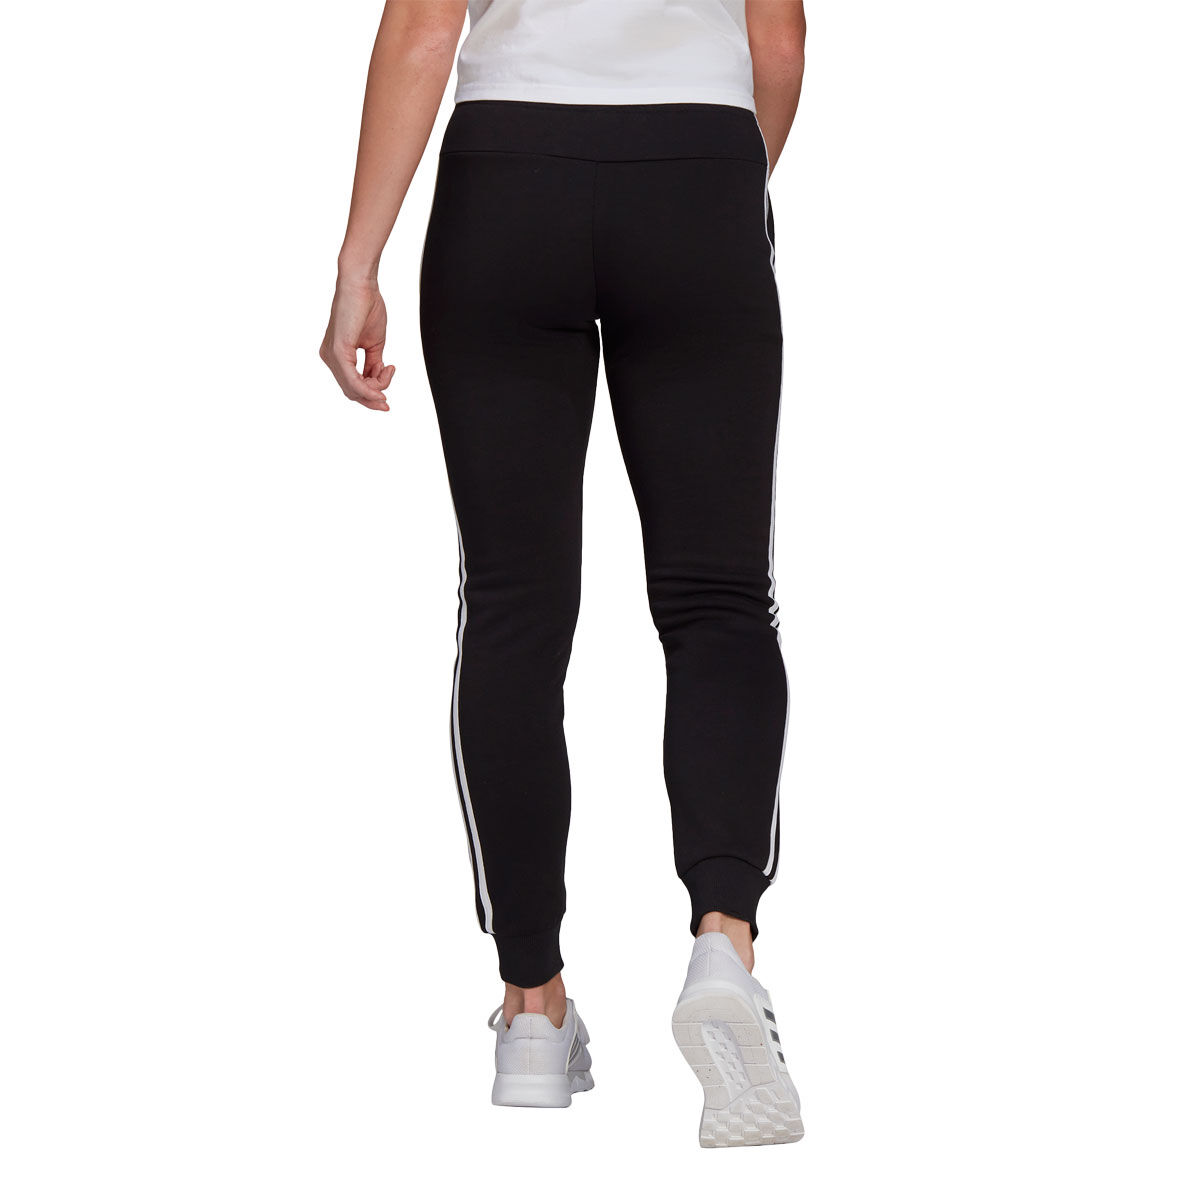 ADIDAS Women's Essentials 3 Stripe Athletic Tights L/Black/C 